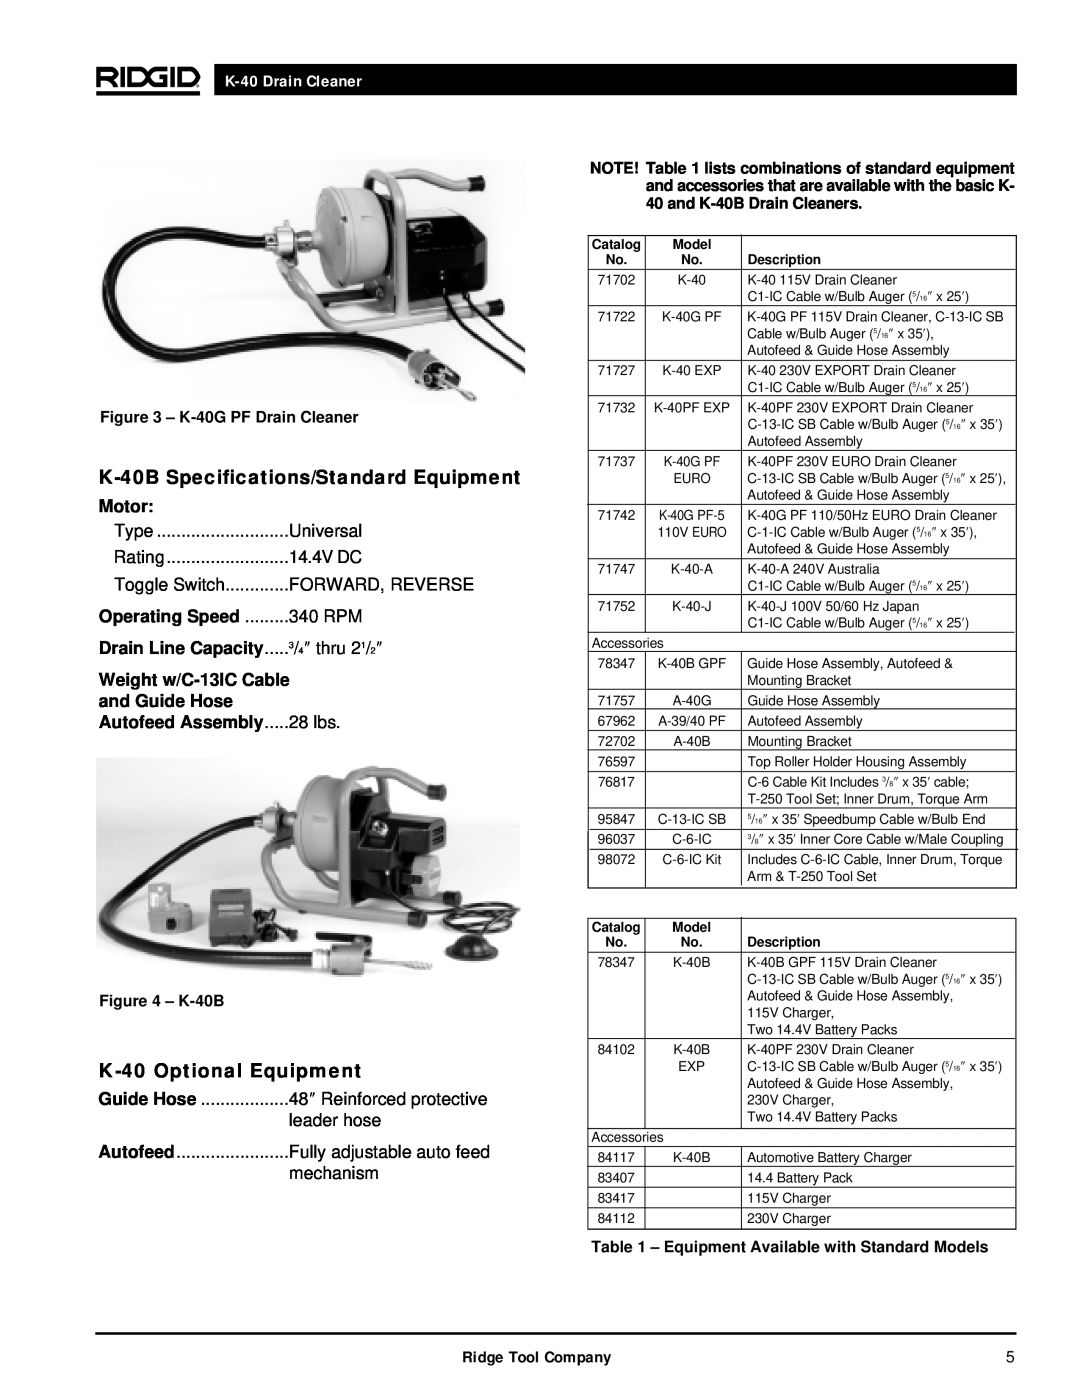 RIDGID manual K-40BSpecifications/Standard Equipment, K-40Optional Equipment, K-40Drain Cleaner, Motor, and Guide Hose 